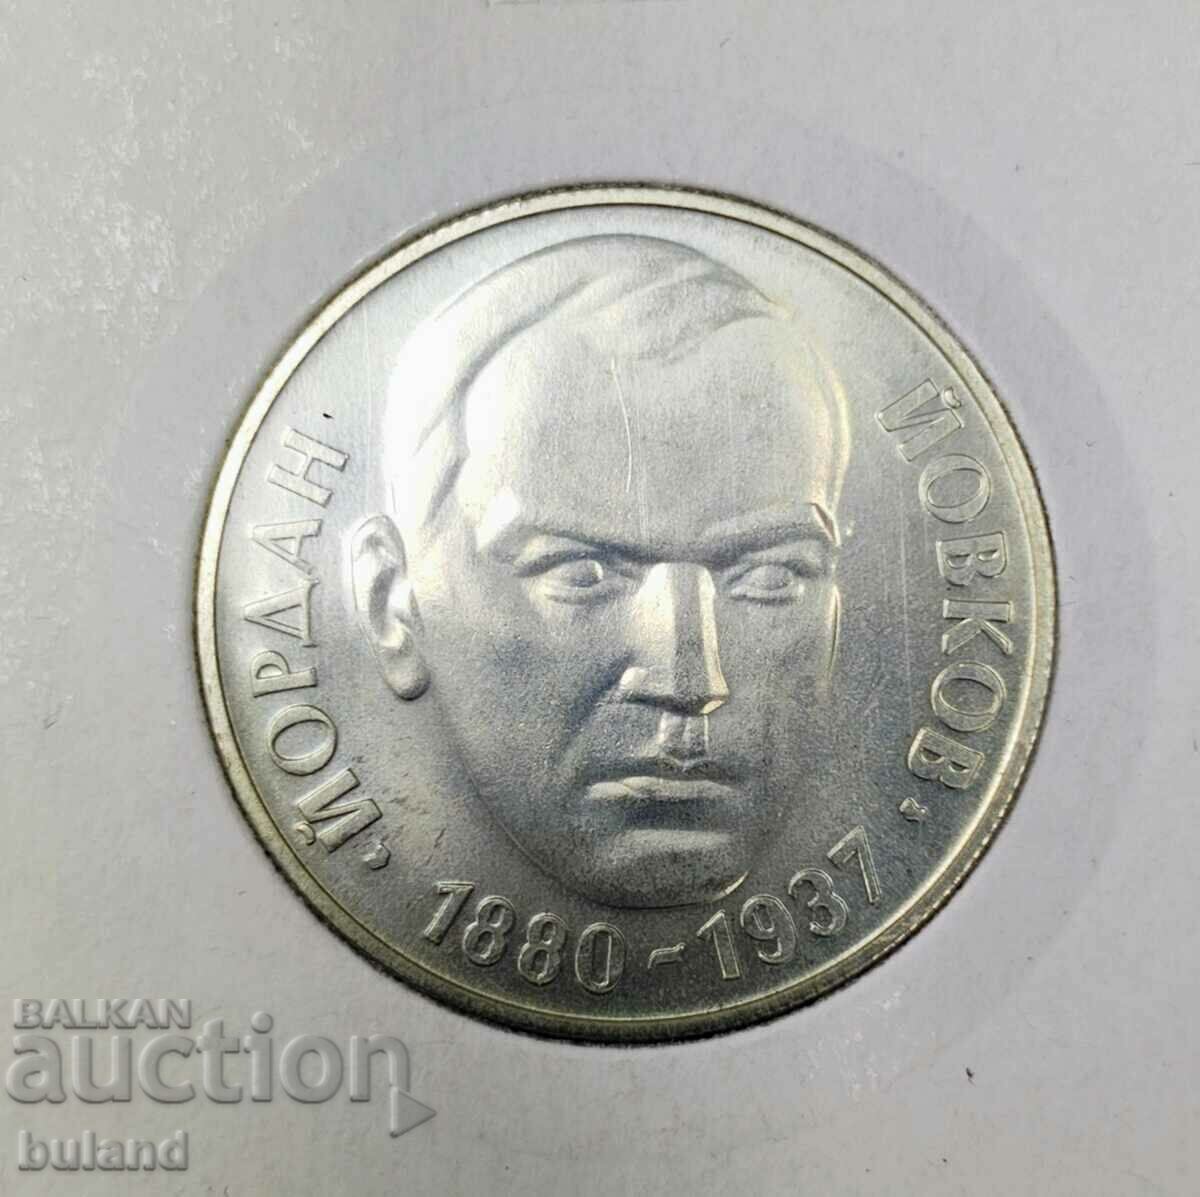 Bulgarian Jubilee Social Coin 2 Leva 1980 Yordan Yovkov